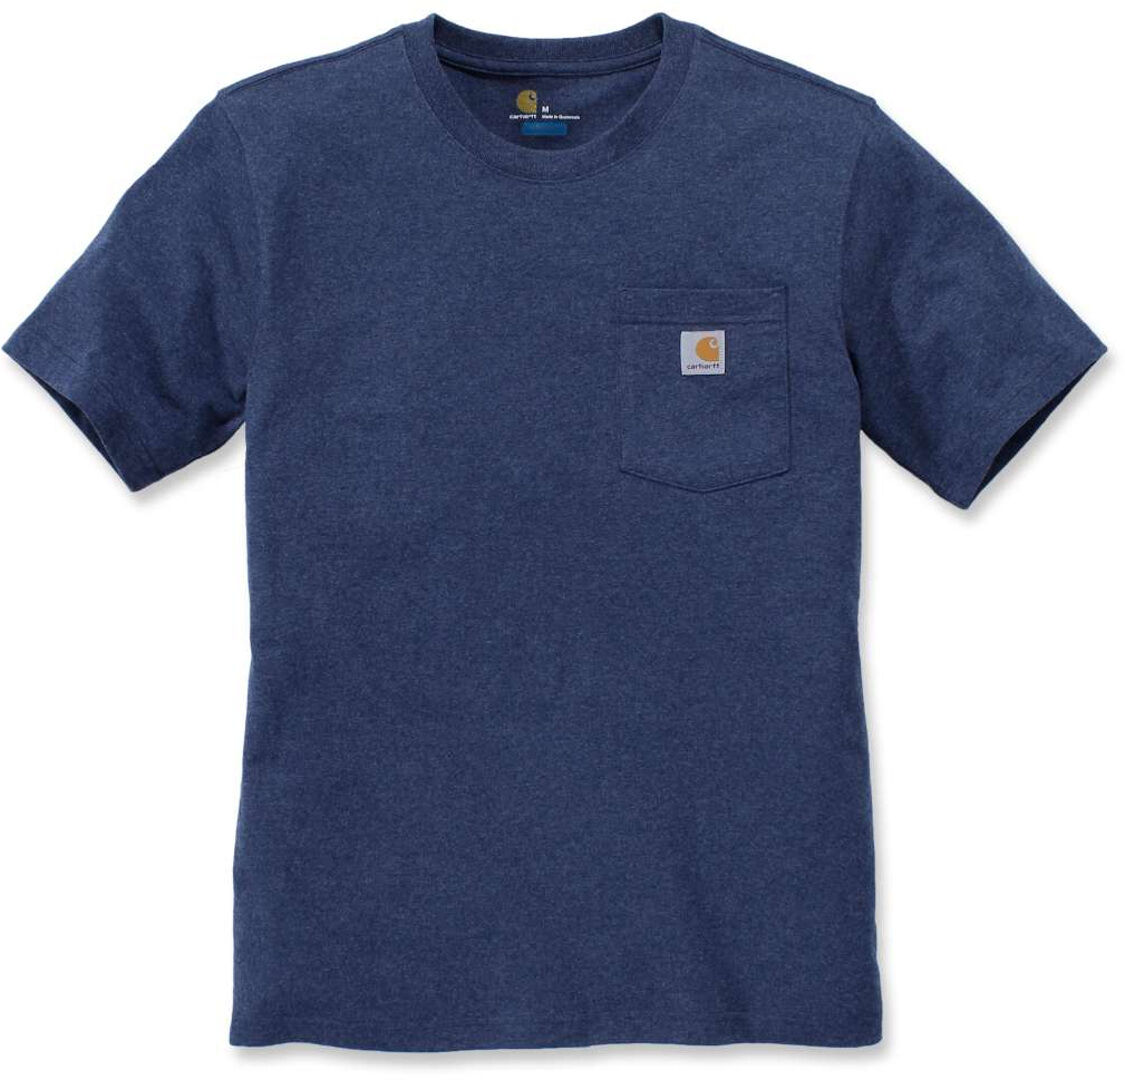 Carhartt Workwear Pocket Camiseta - Azul (S)